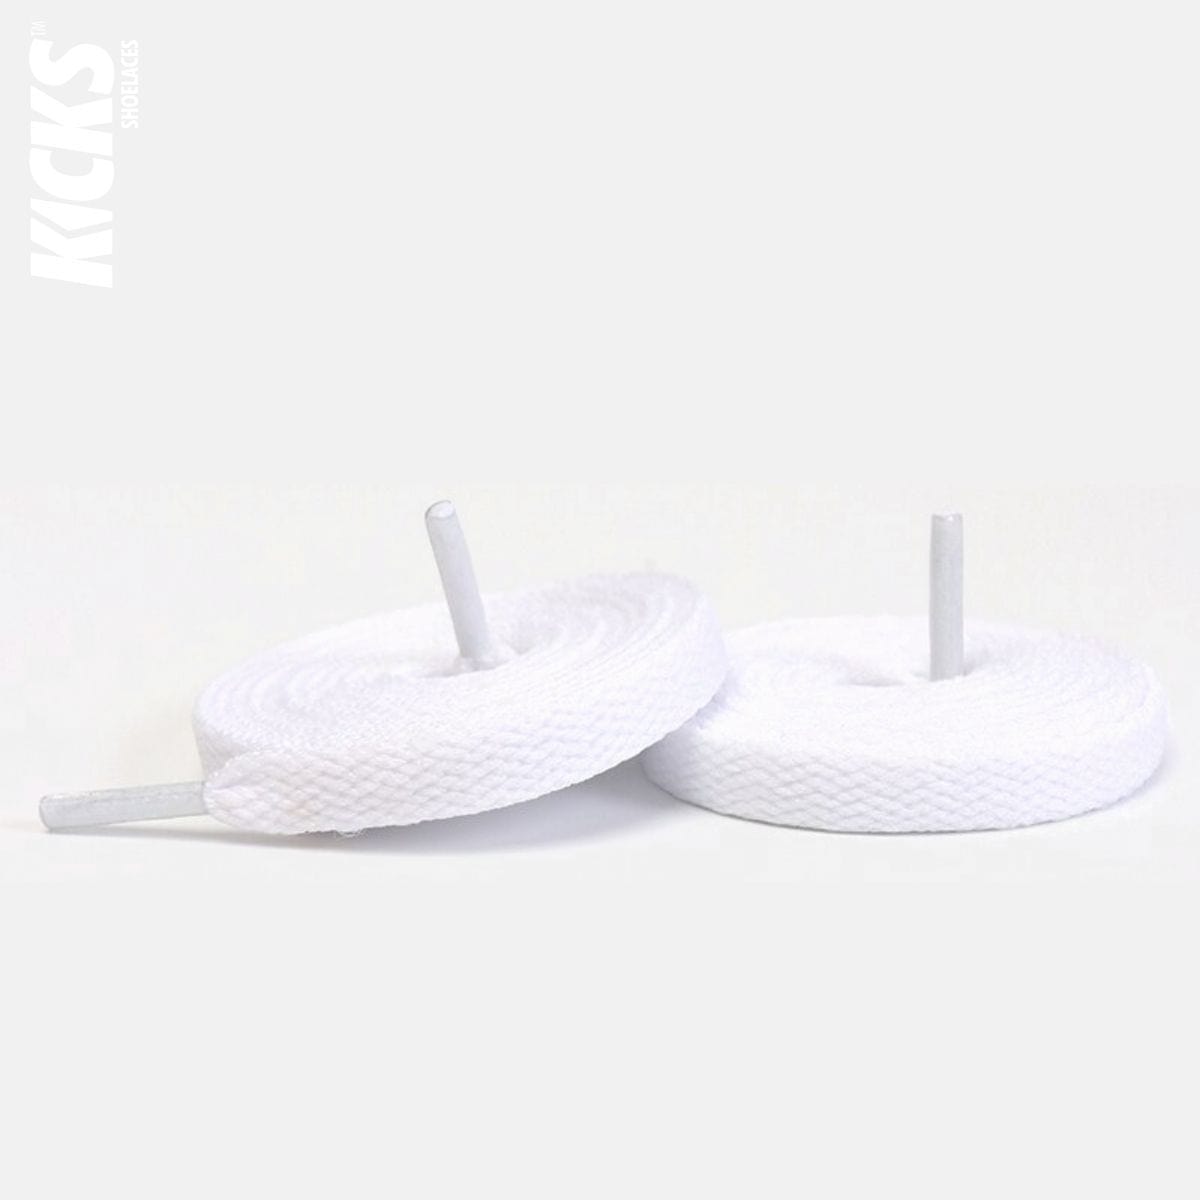 Nike Air Max Replacement Shoelaces - Kicks Shoelaces